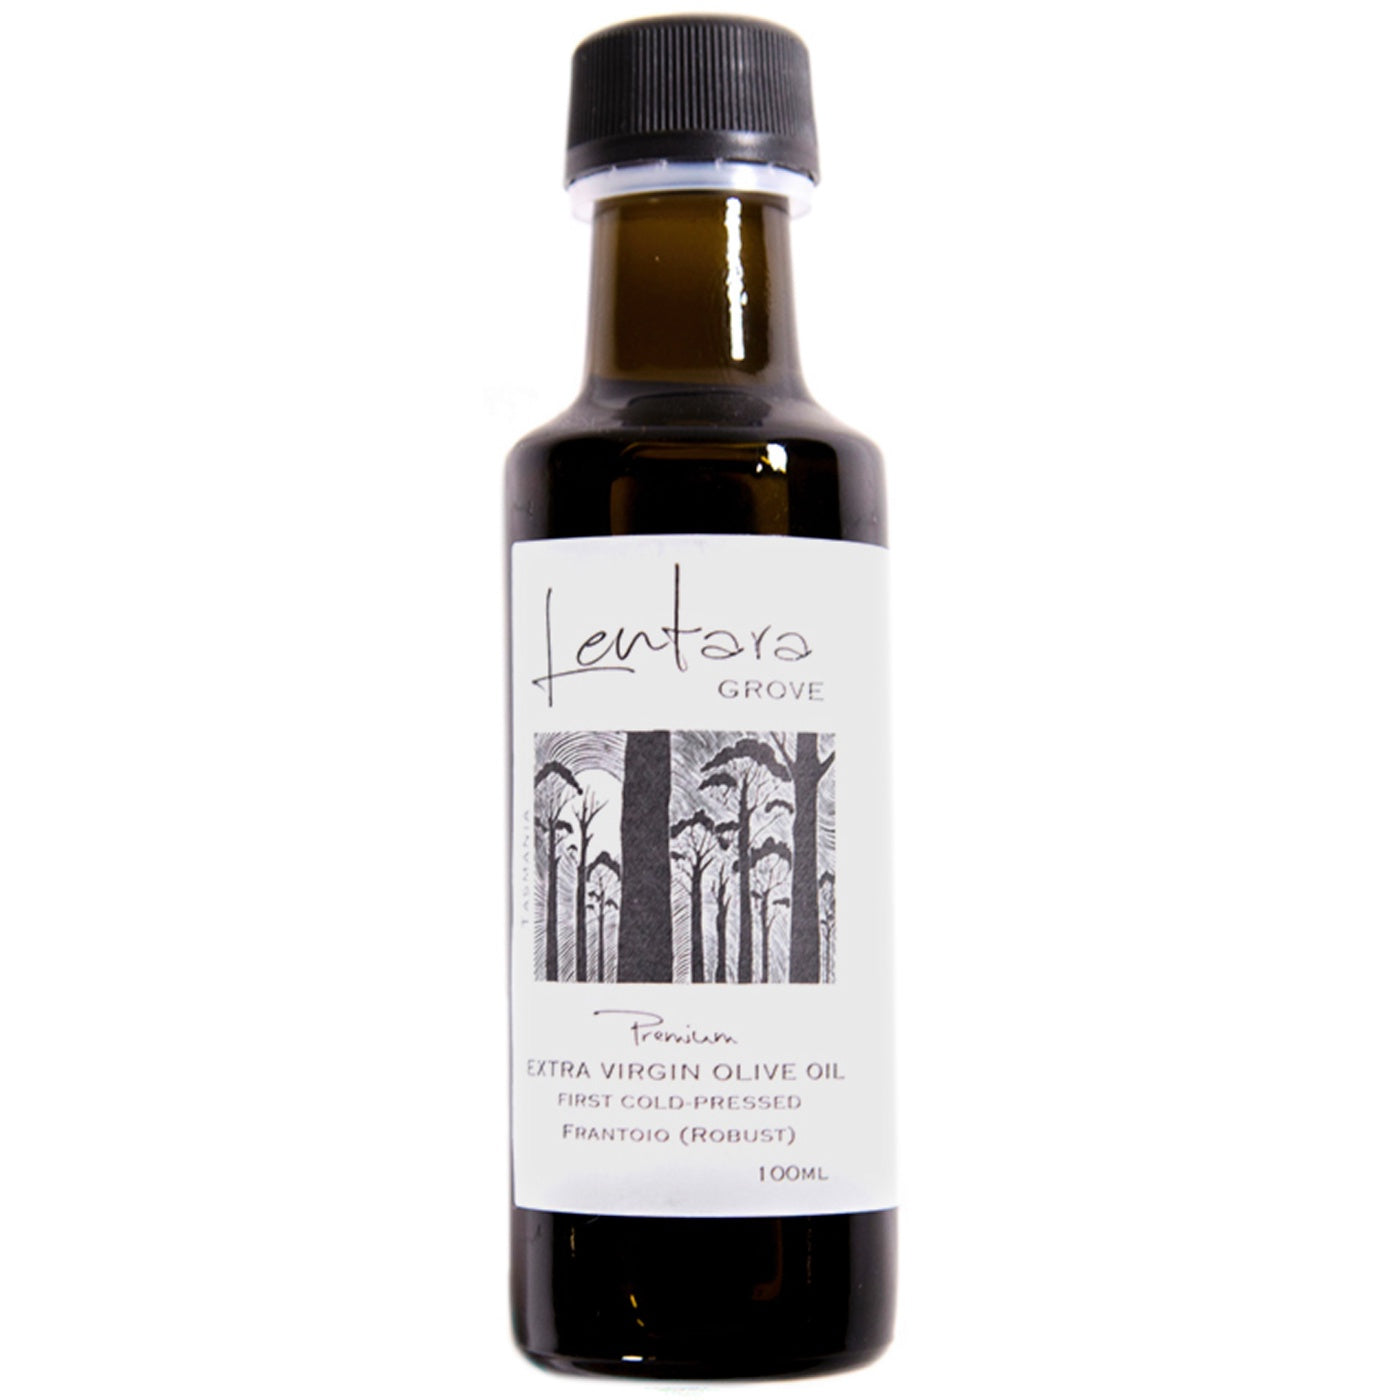 Lentara Grove – Extra Virgin Olive Oil - Frantoio (Robust)